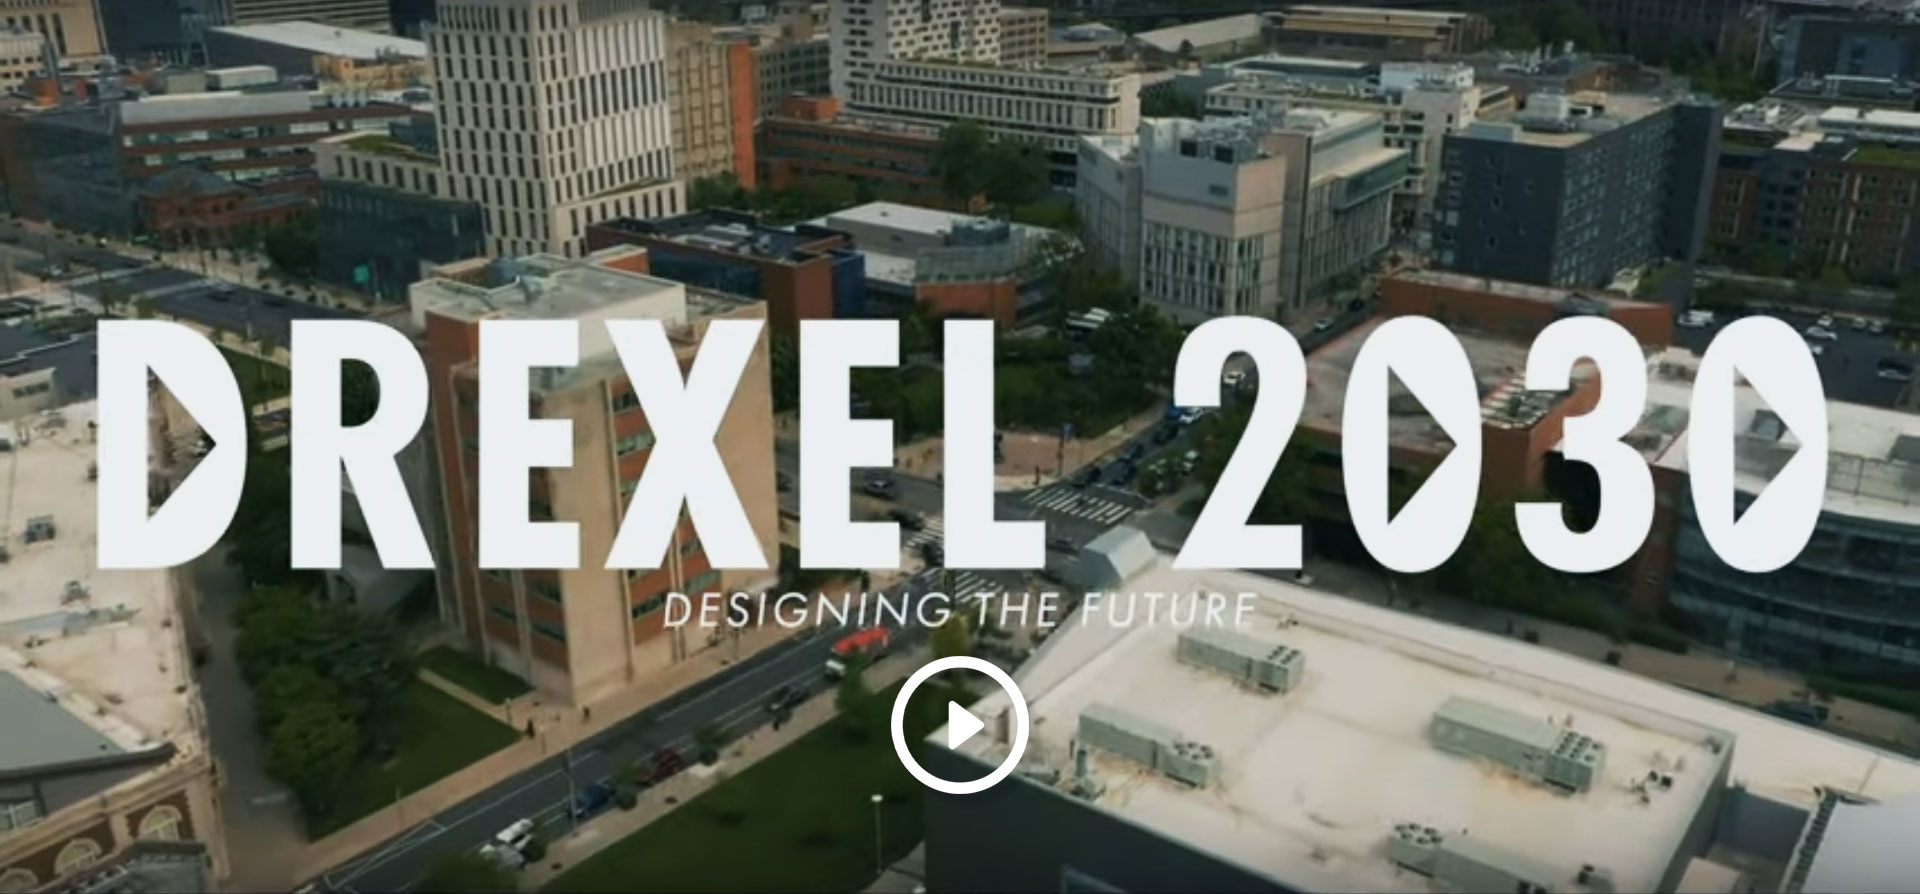 Drexel 2030 Designing the Future video still